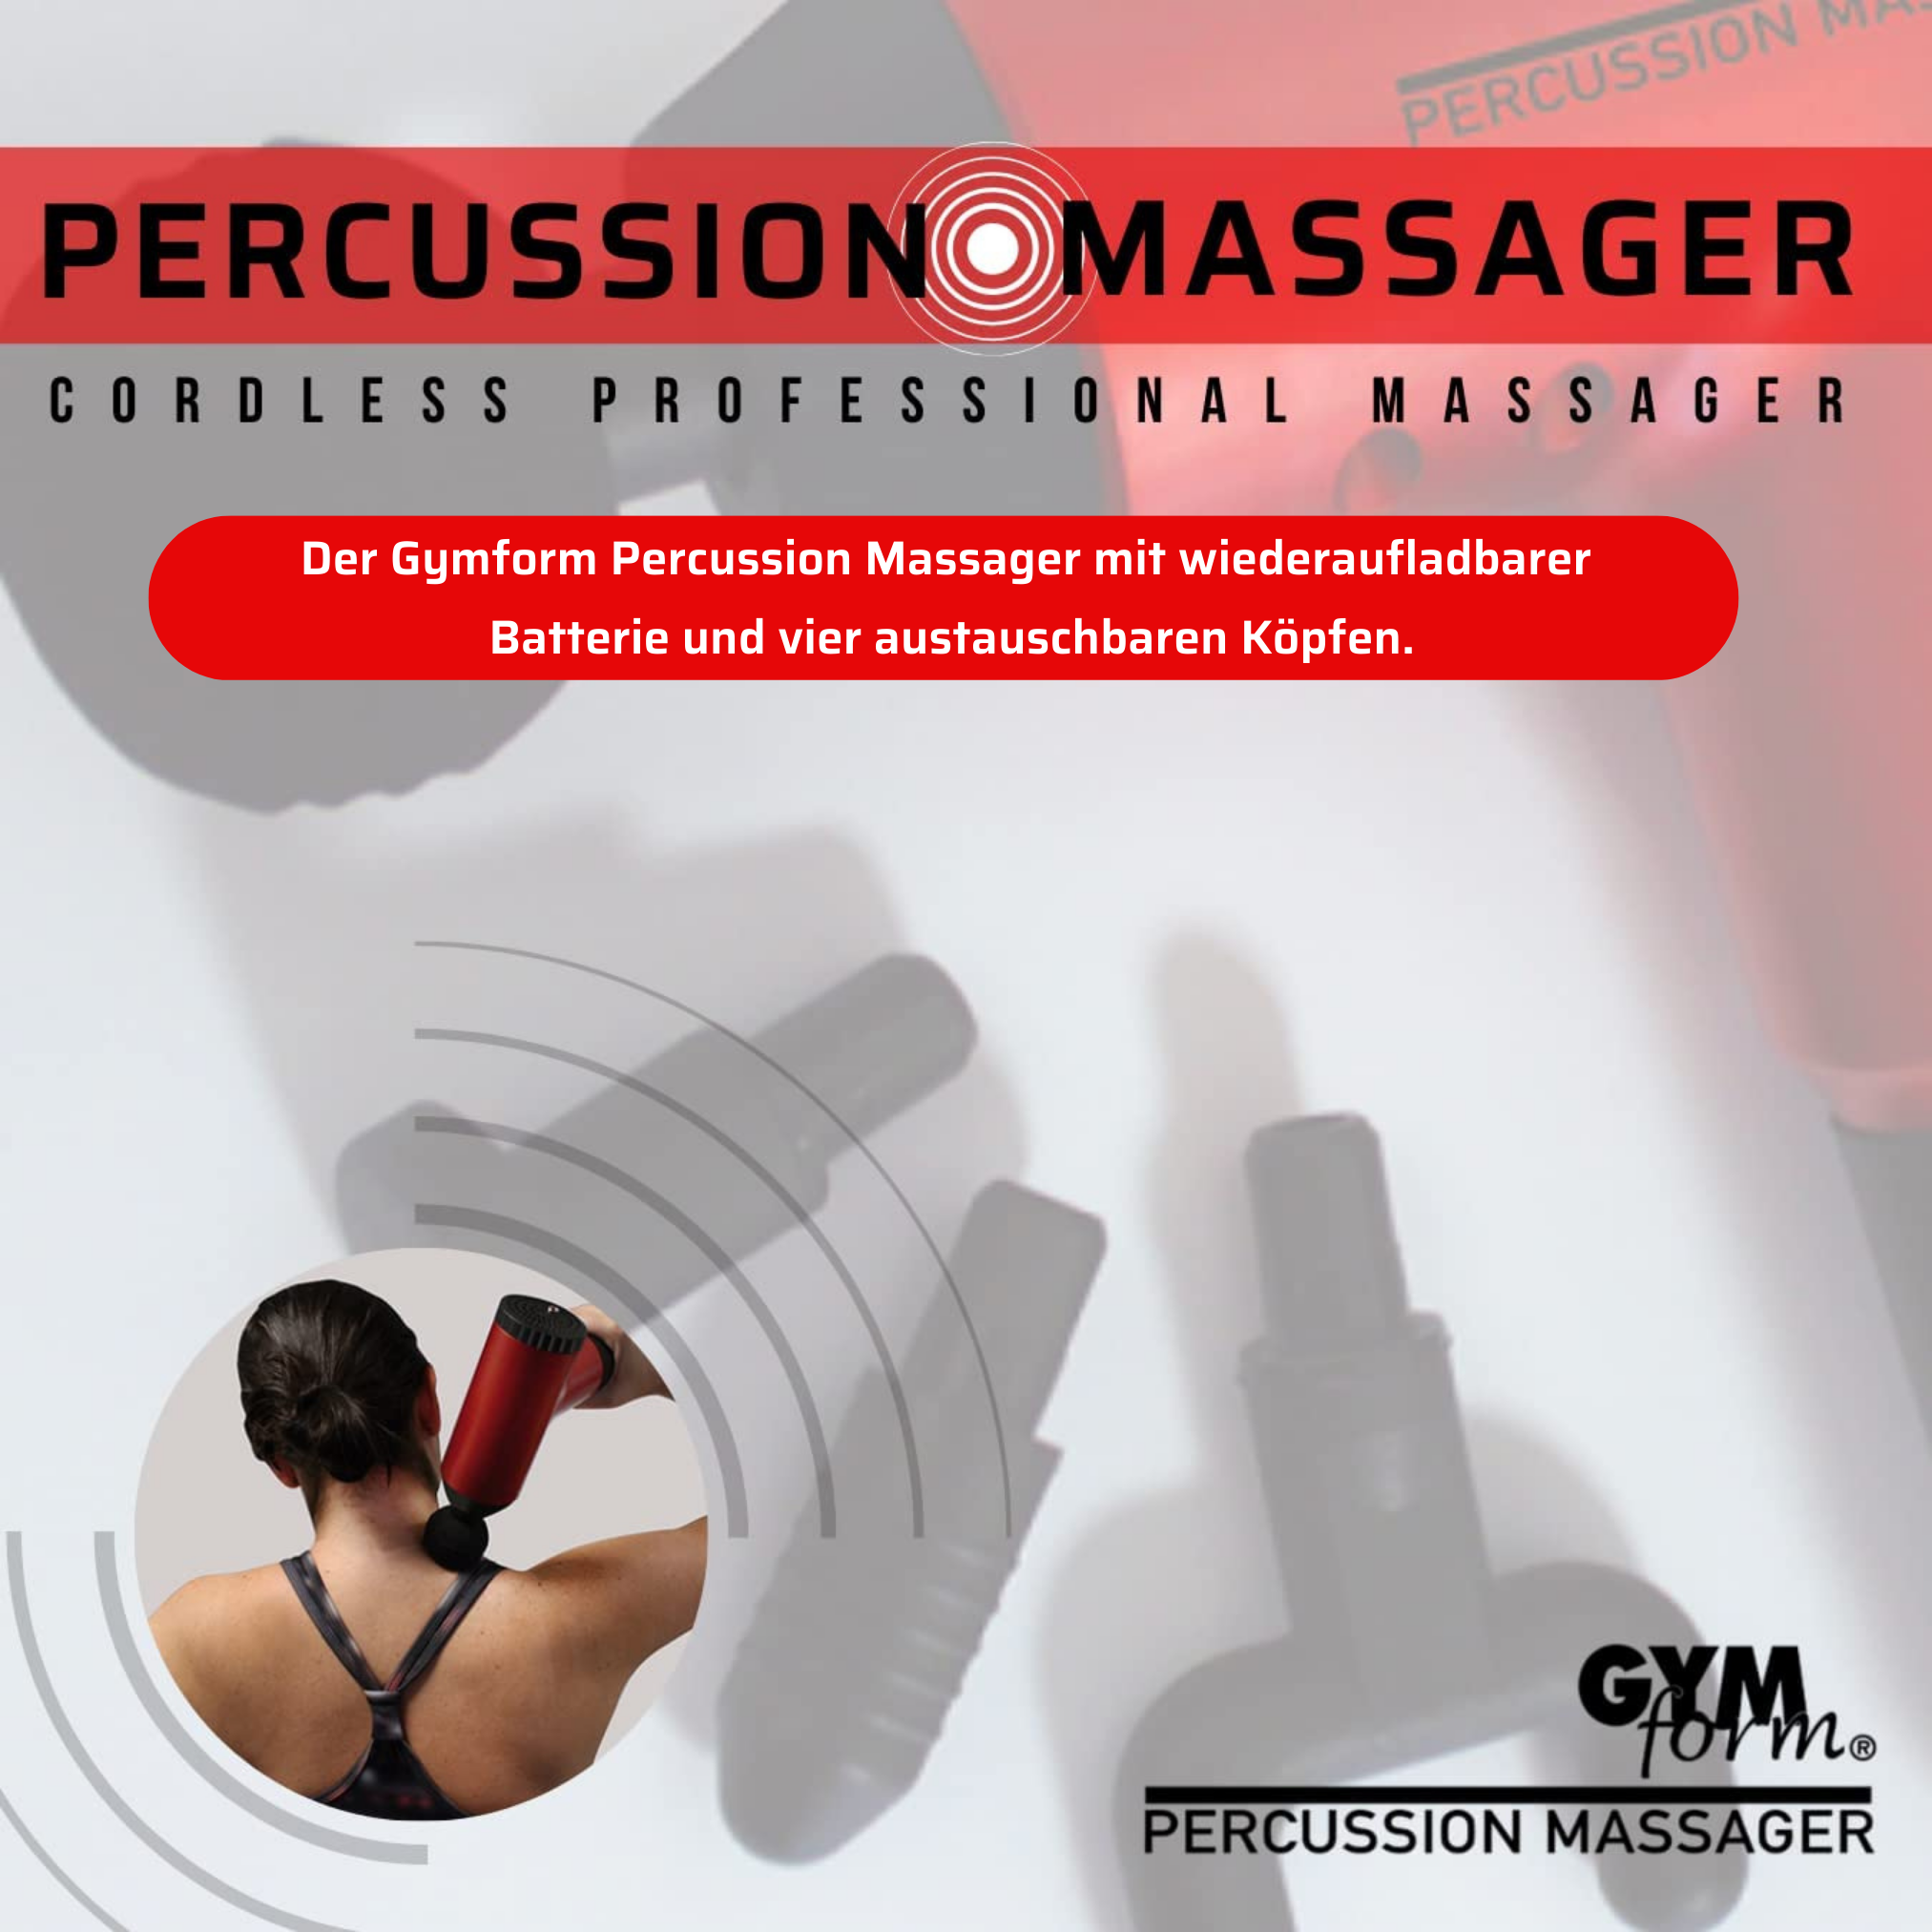 Cushion Percussion Massage GYMFORM Massagepistole Massager